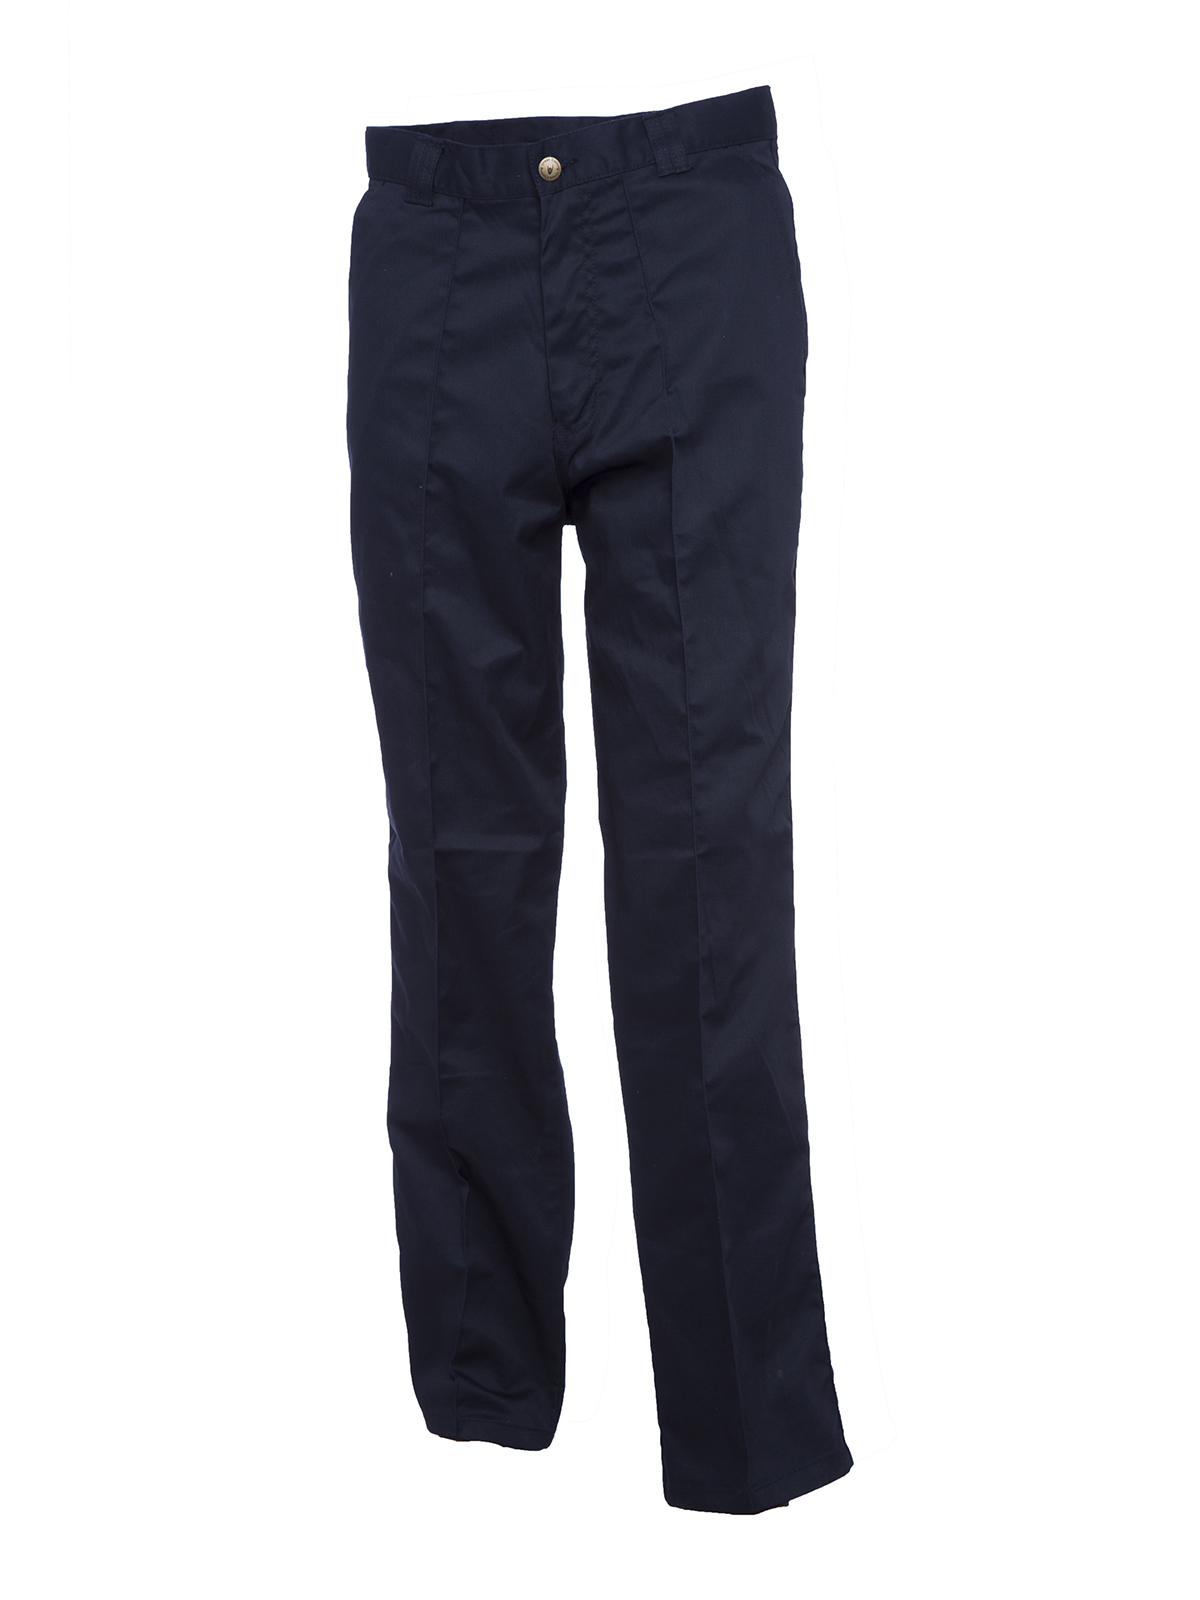 Workwear Trousers, Navy Blue - 46L